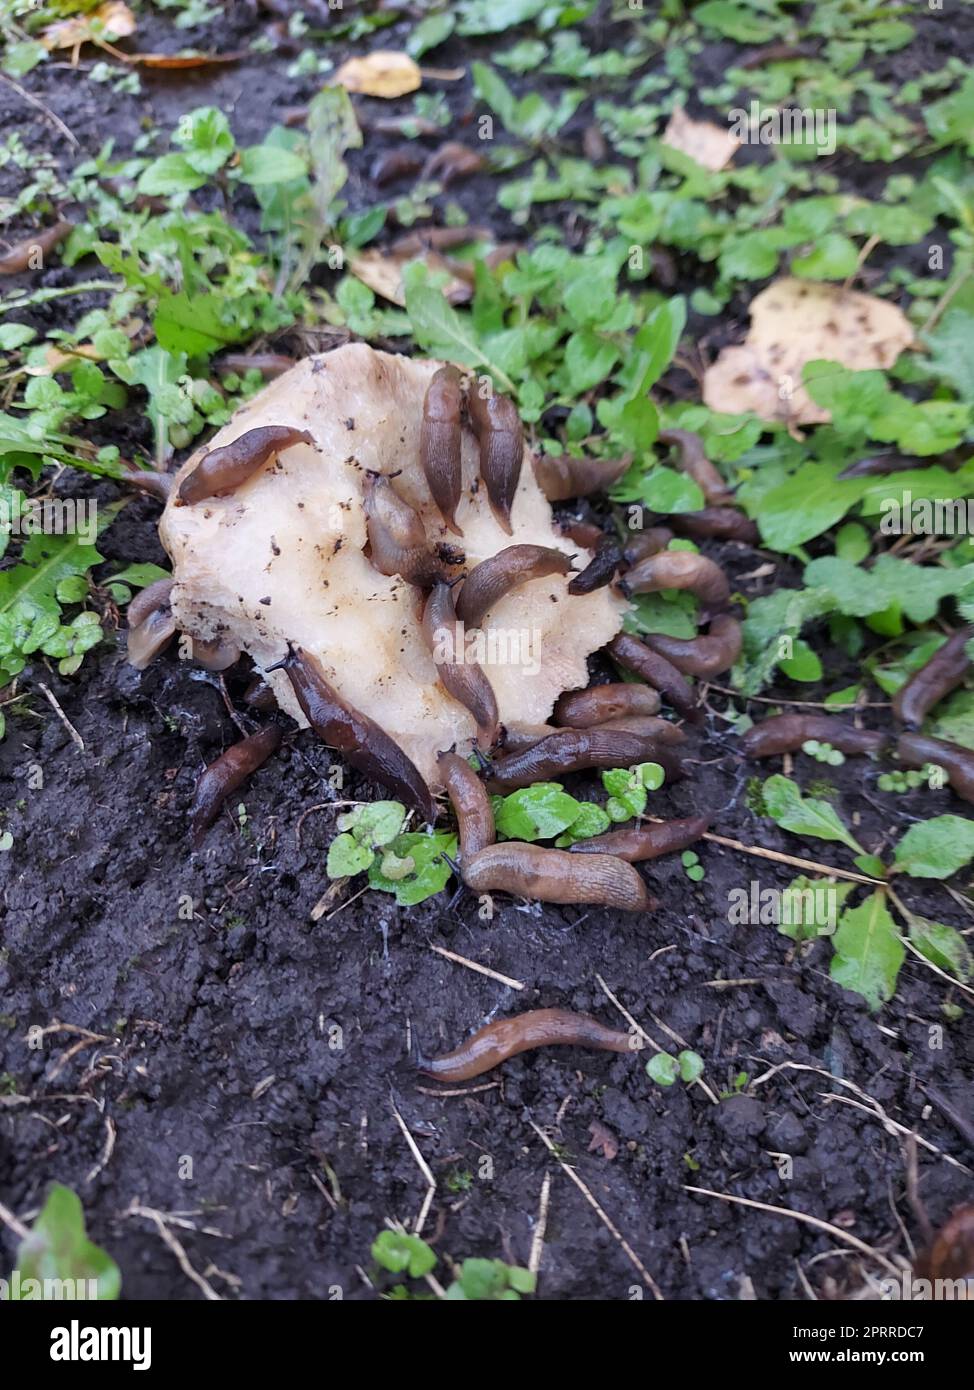 Slugs destroy champignon mushroom in a summer garden as an illustration of pests. Many brown slugs or deroceres eat the mushroom.  Stock Photo